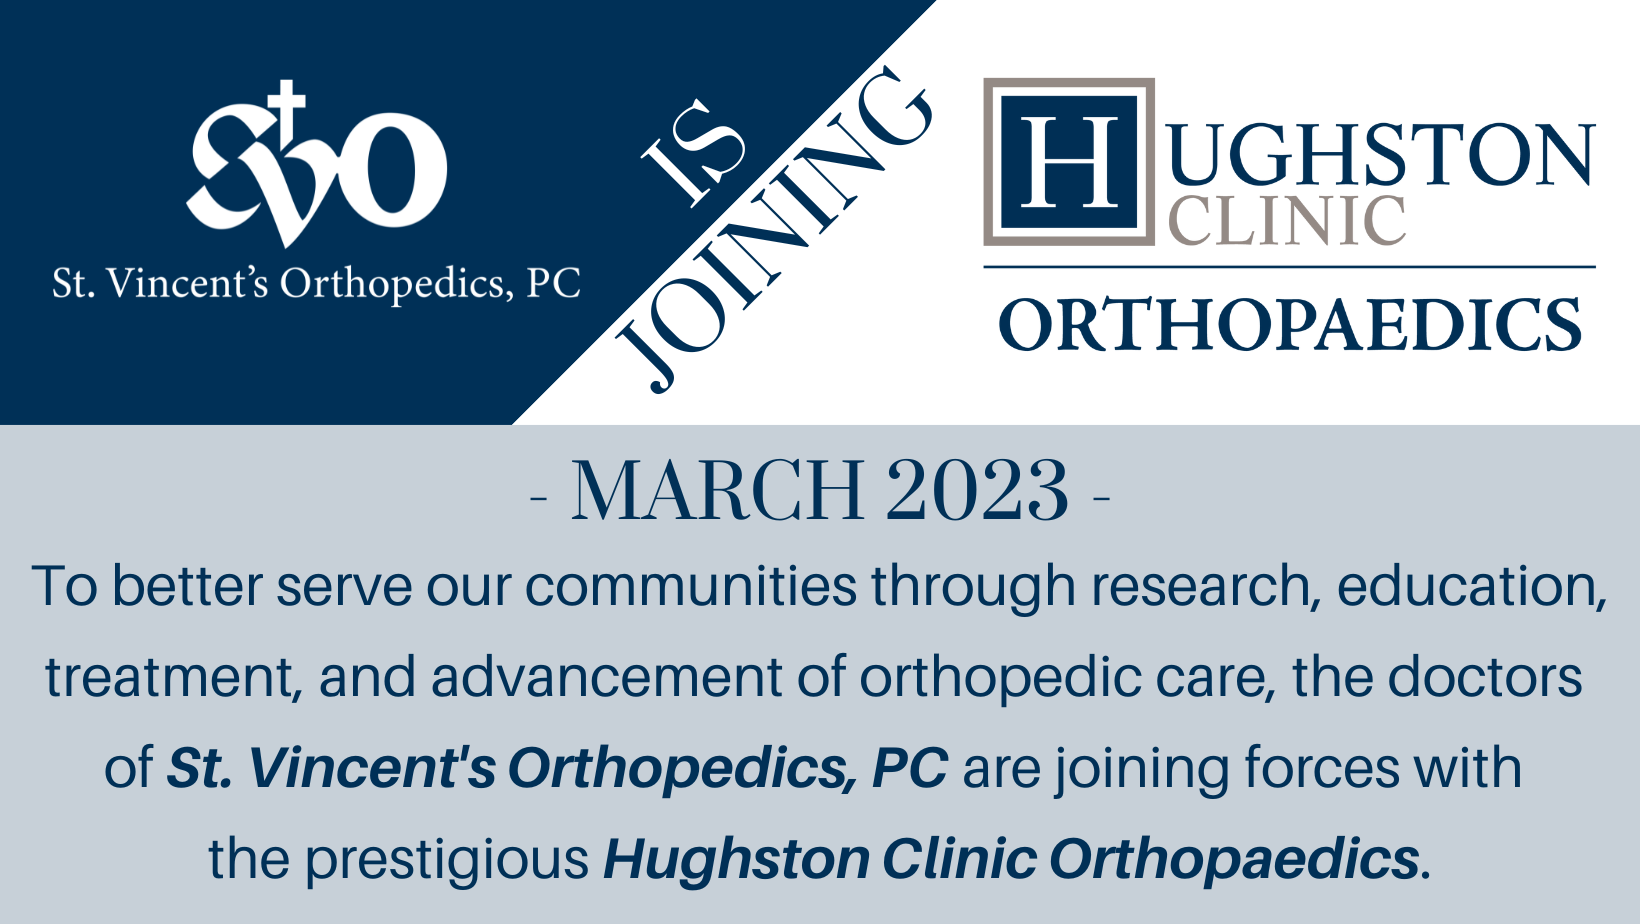 St. Vincent’s Orthopedics joins Hughston Clinic’s Organization